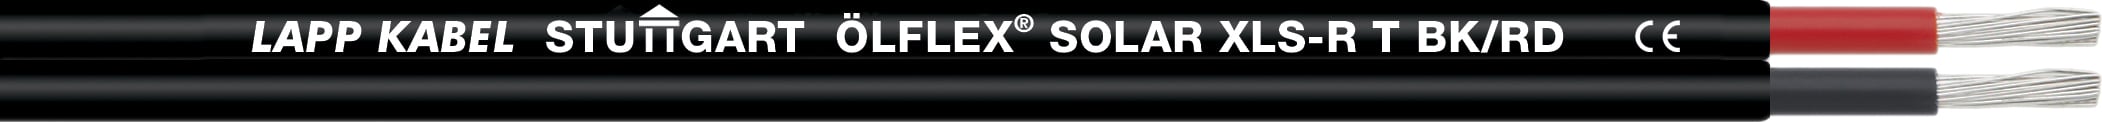 Lapp - oLFLEX SOLAR XLS-R T 2X4 BK-RD